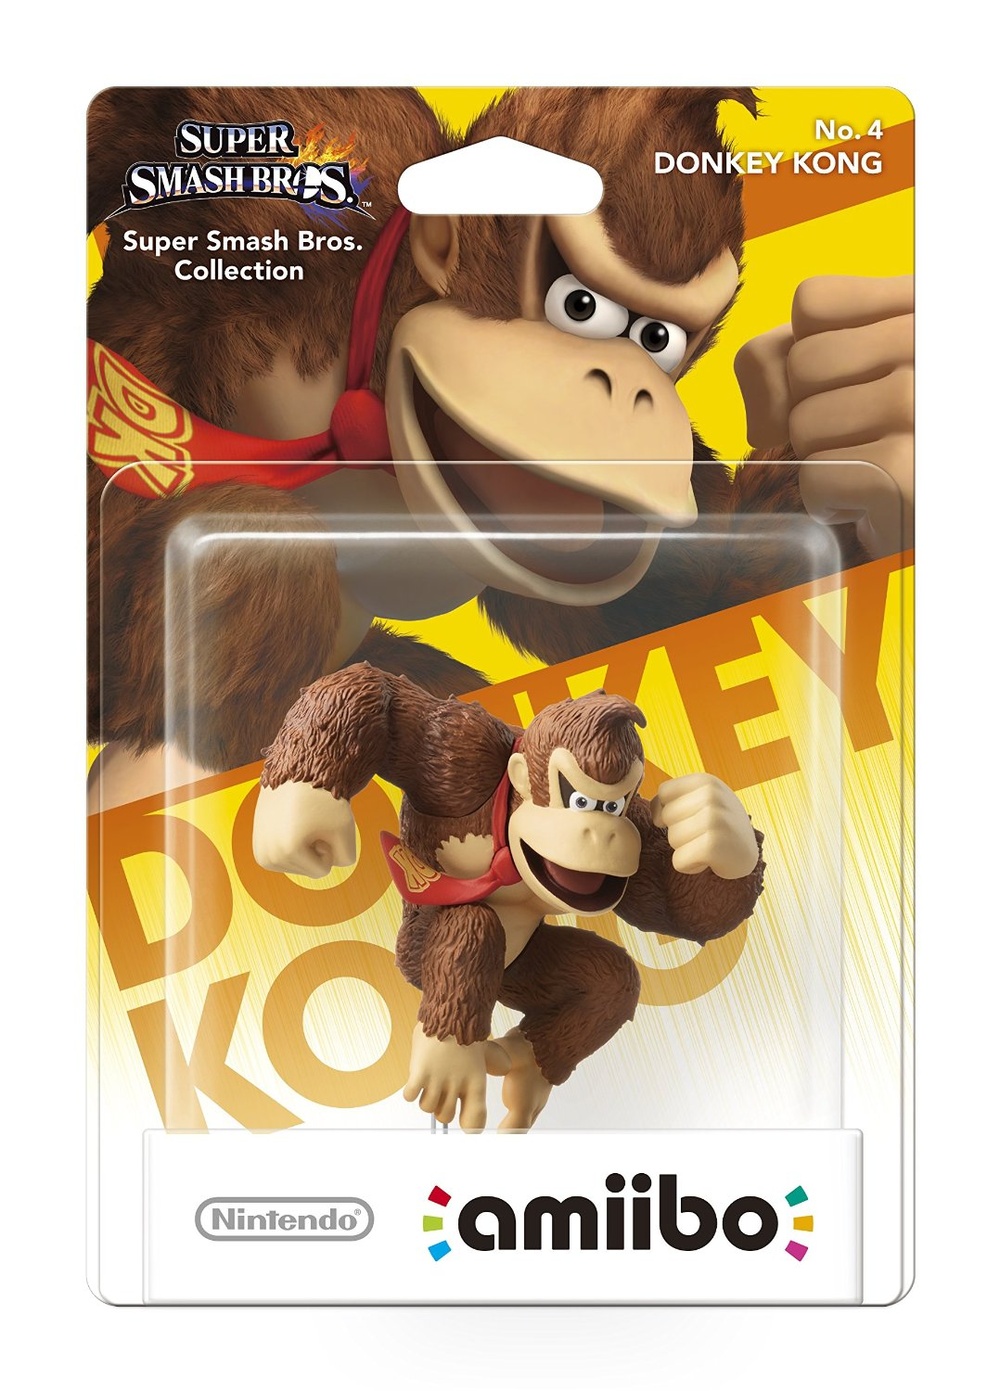 Donkey Kong as amiibo.